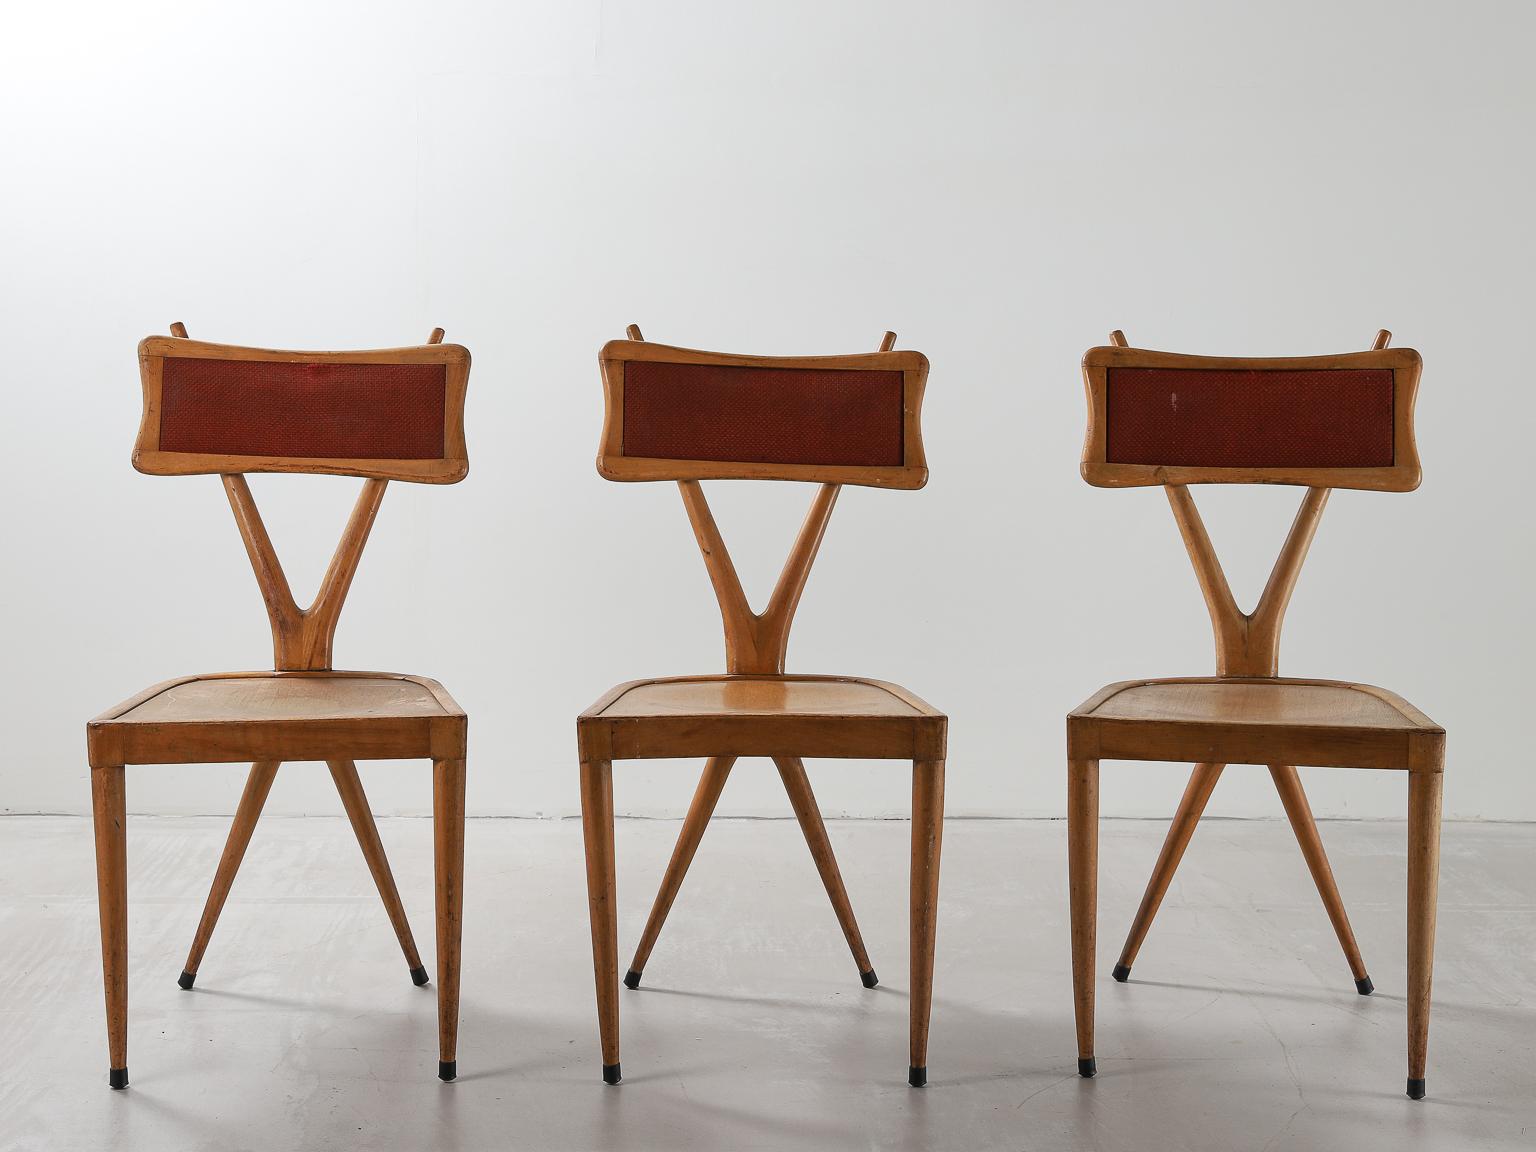 Italian Vigorelli Gianni Set of 3 Wood and Original Fabric Chairs, 1950s